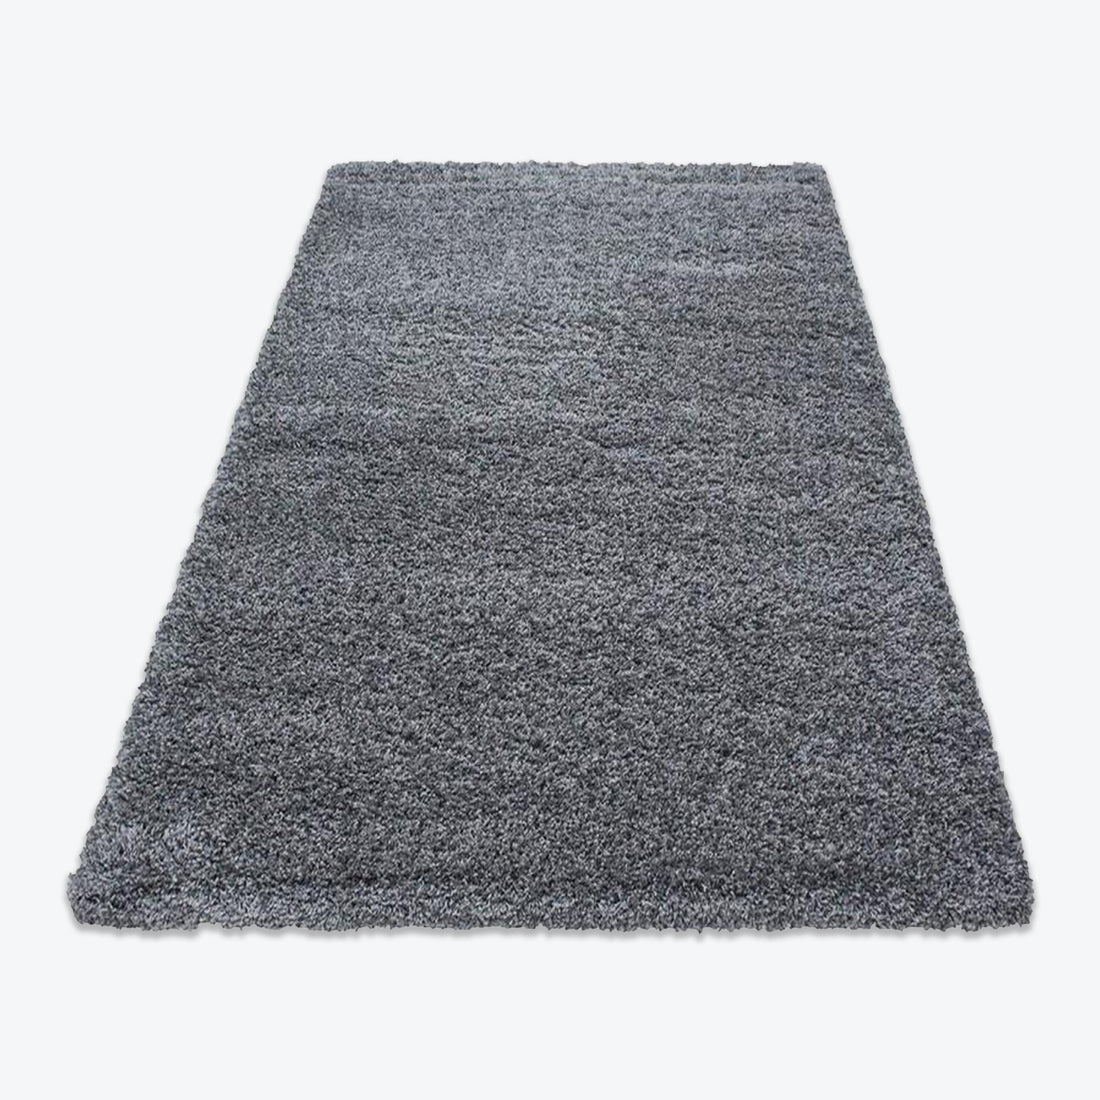 Big gray rug shaggy deep pile fluffy area rug